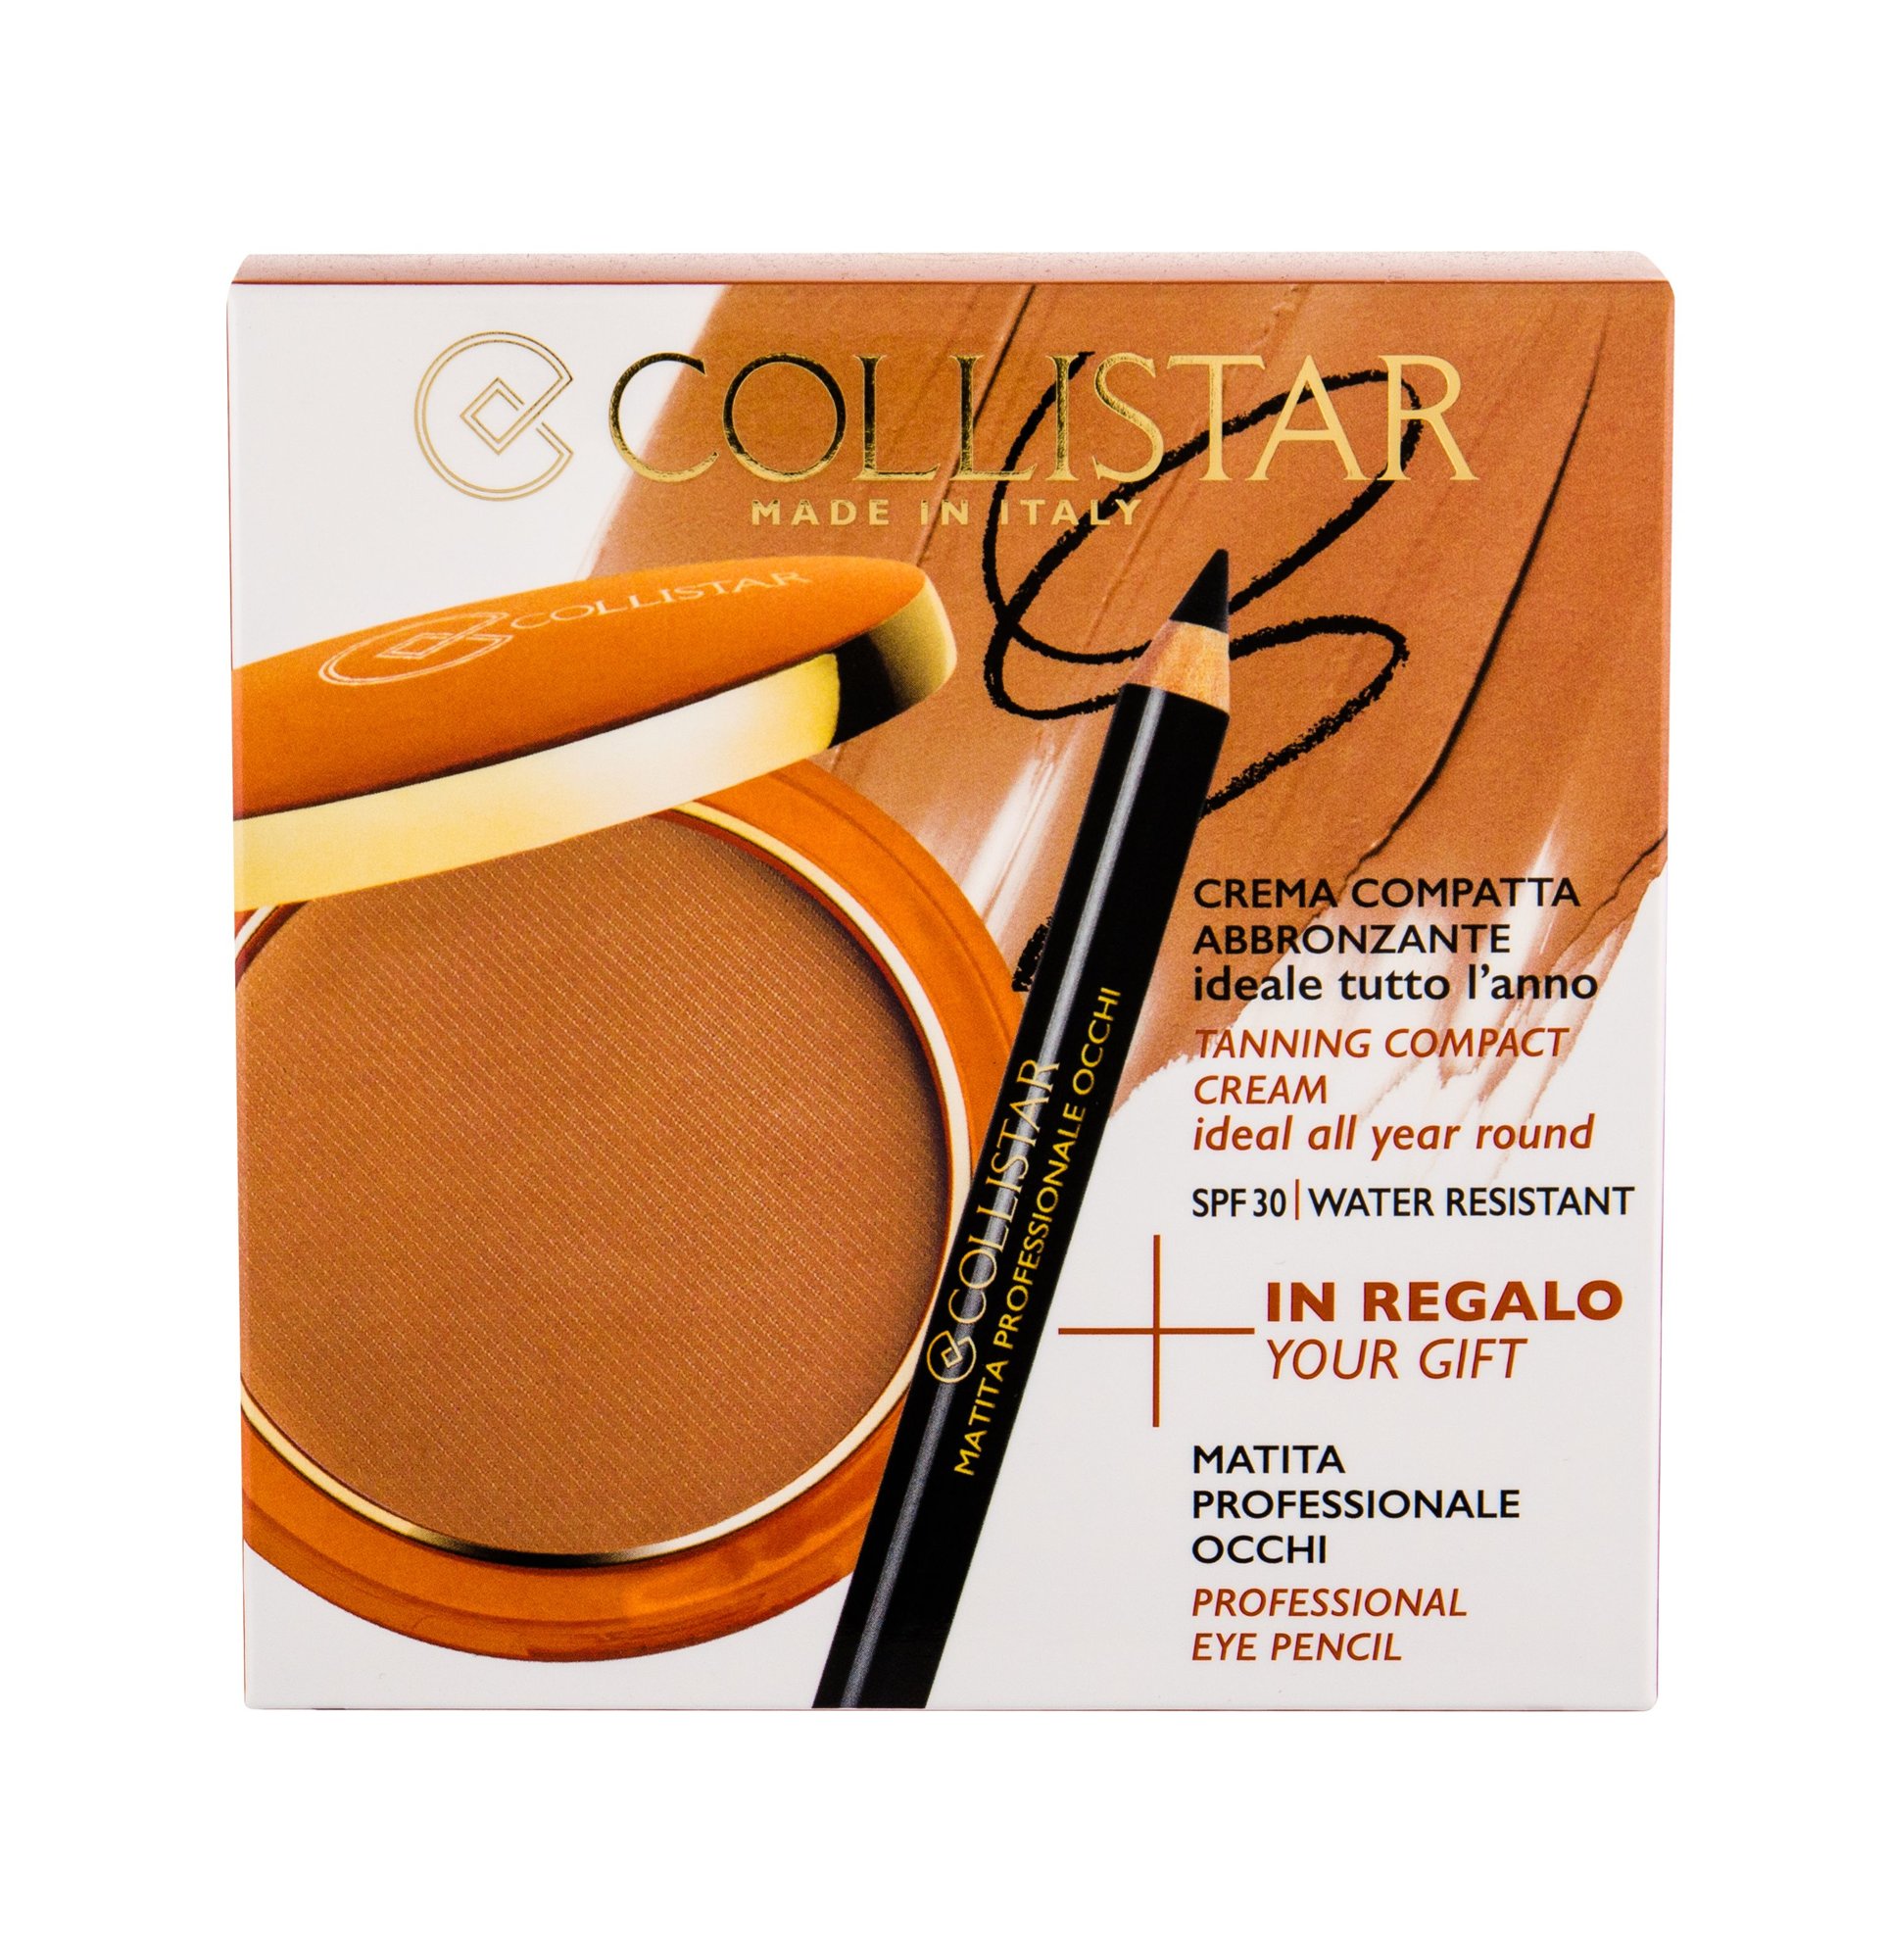 Collistar Tanning Compact Cream